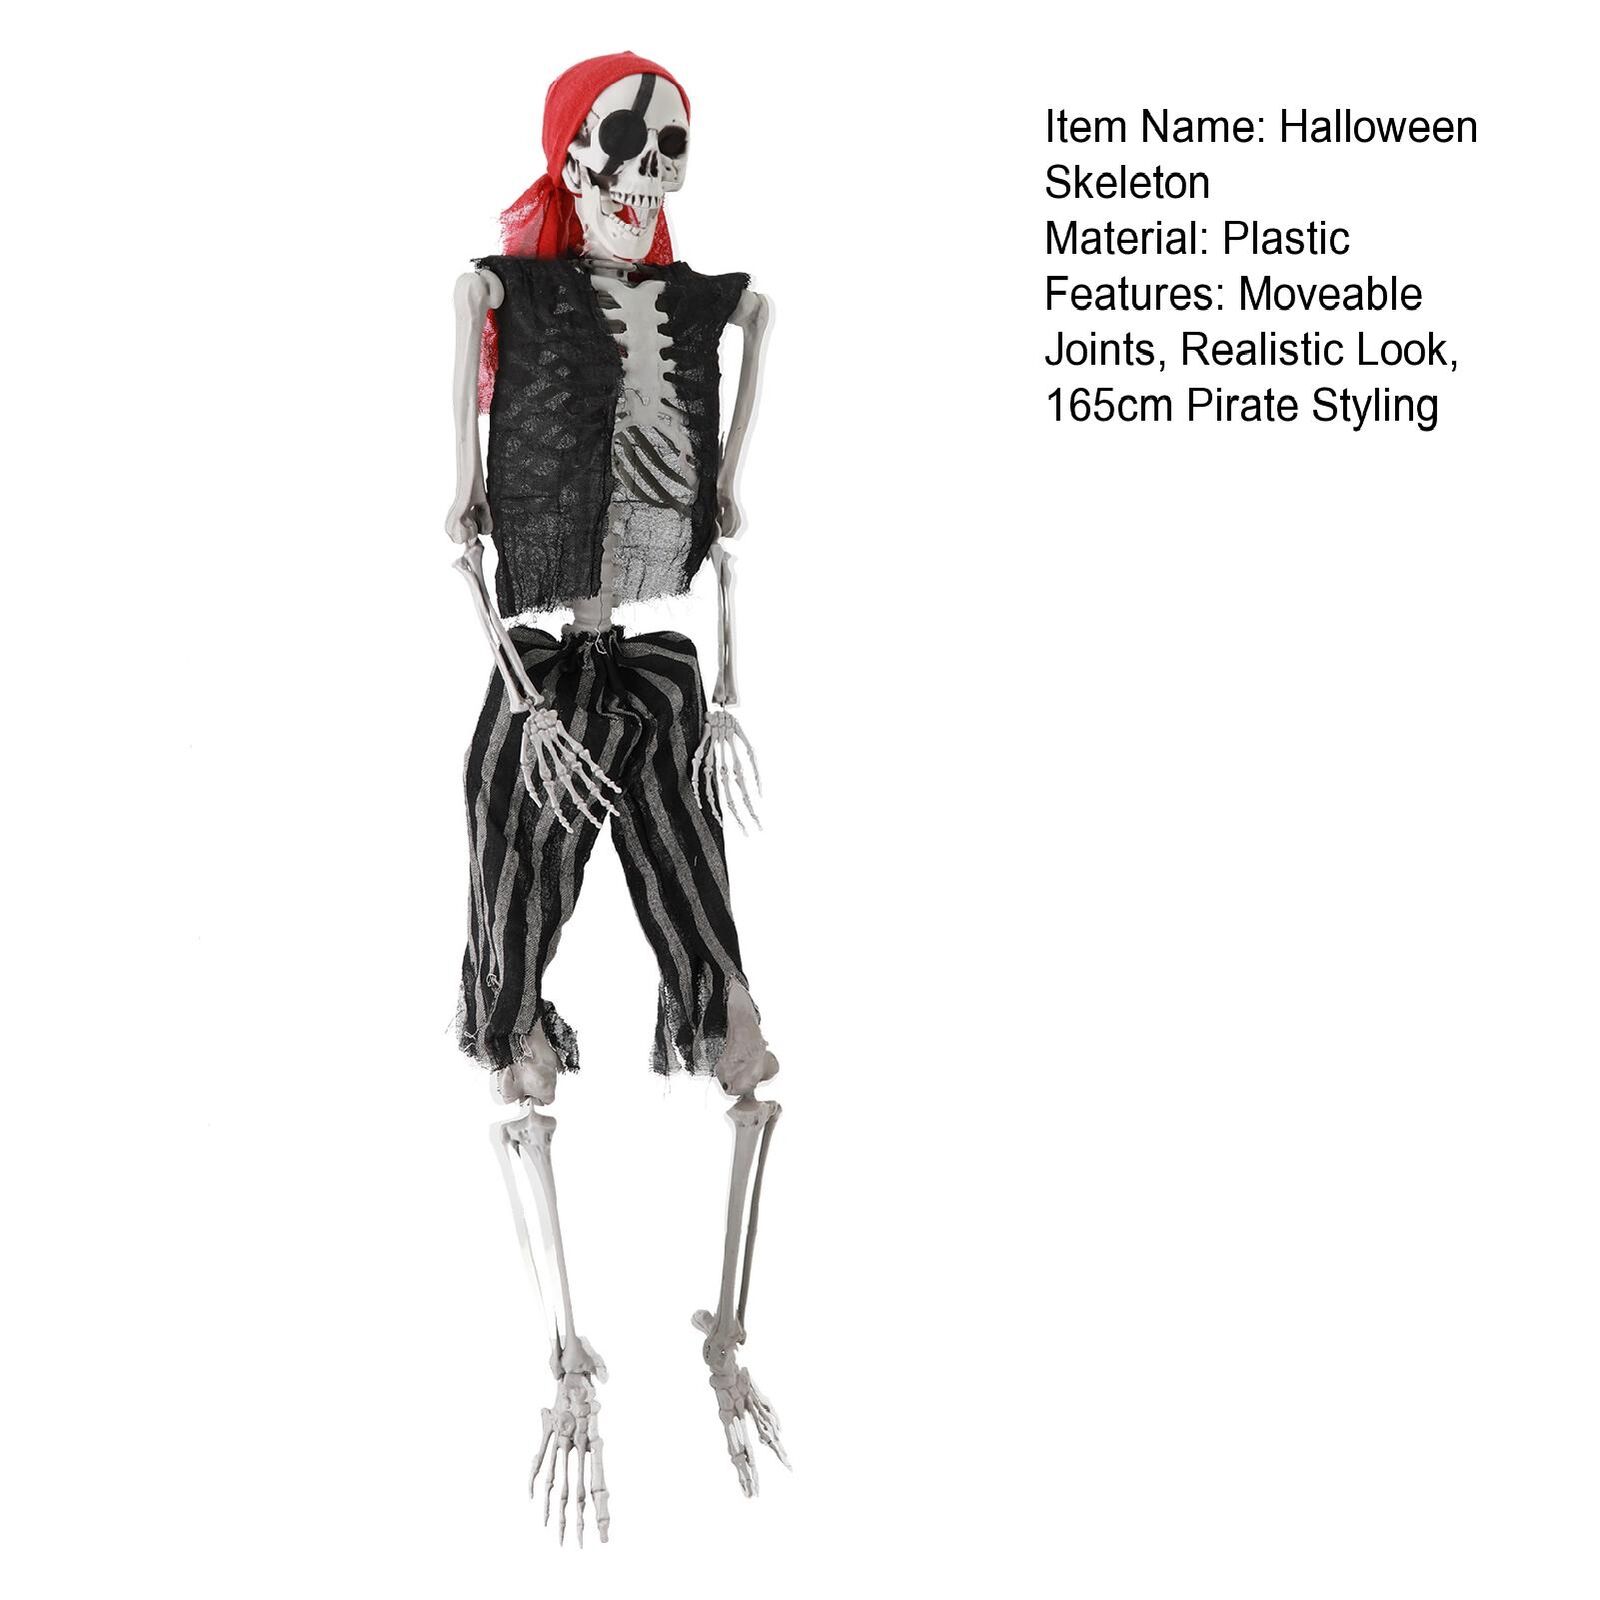 Life Size Imitation Skeleton - Pirate Styling Halloween Pose Skeleton Prop Decor